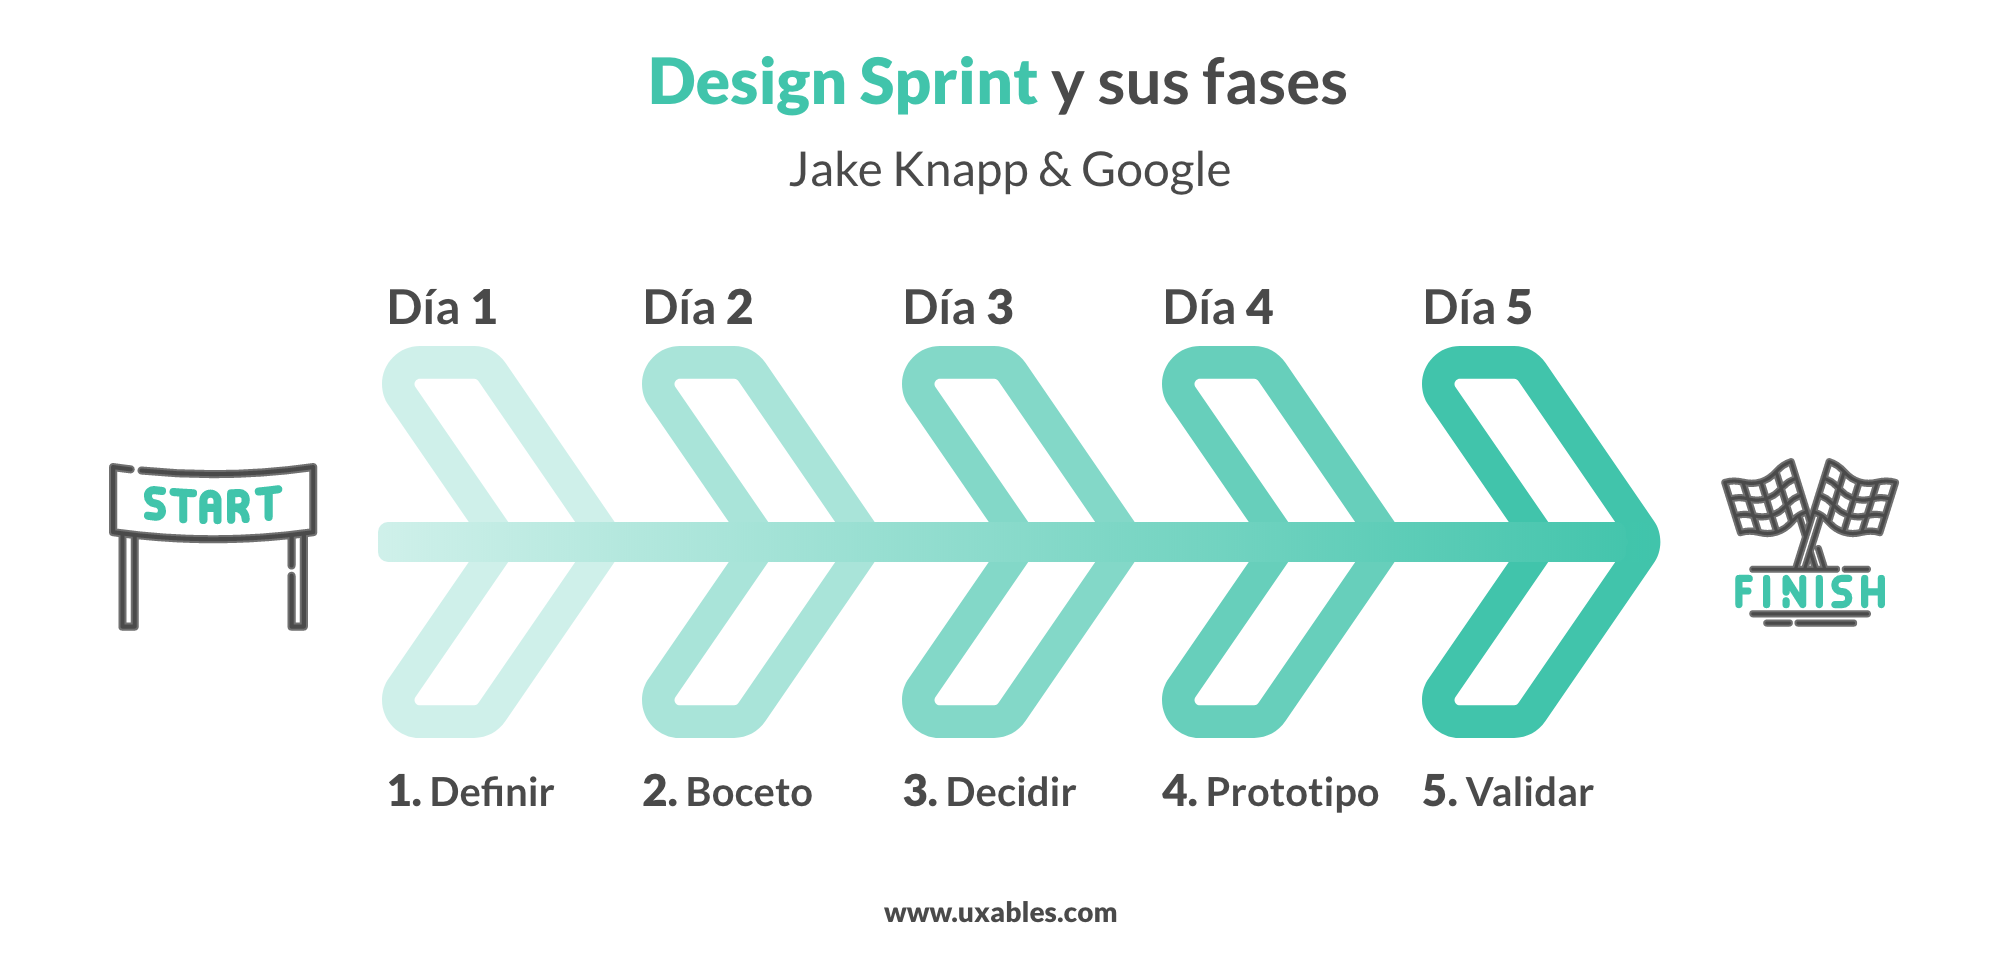 Realizar un design sprint